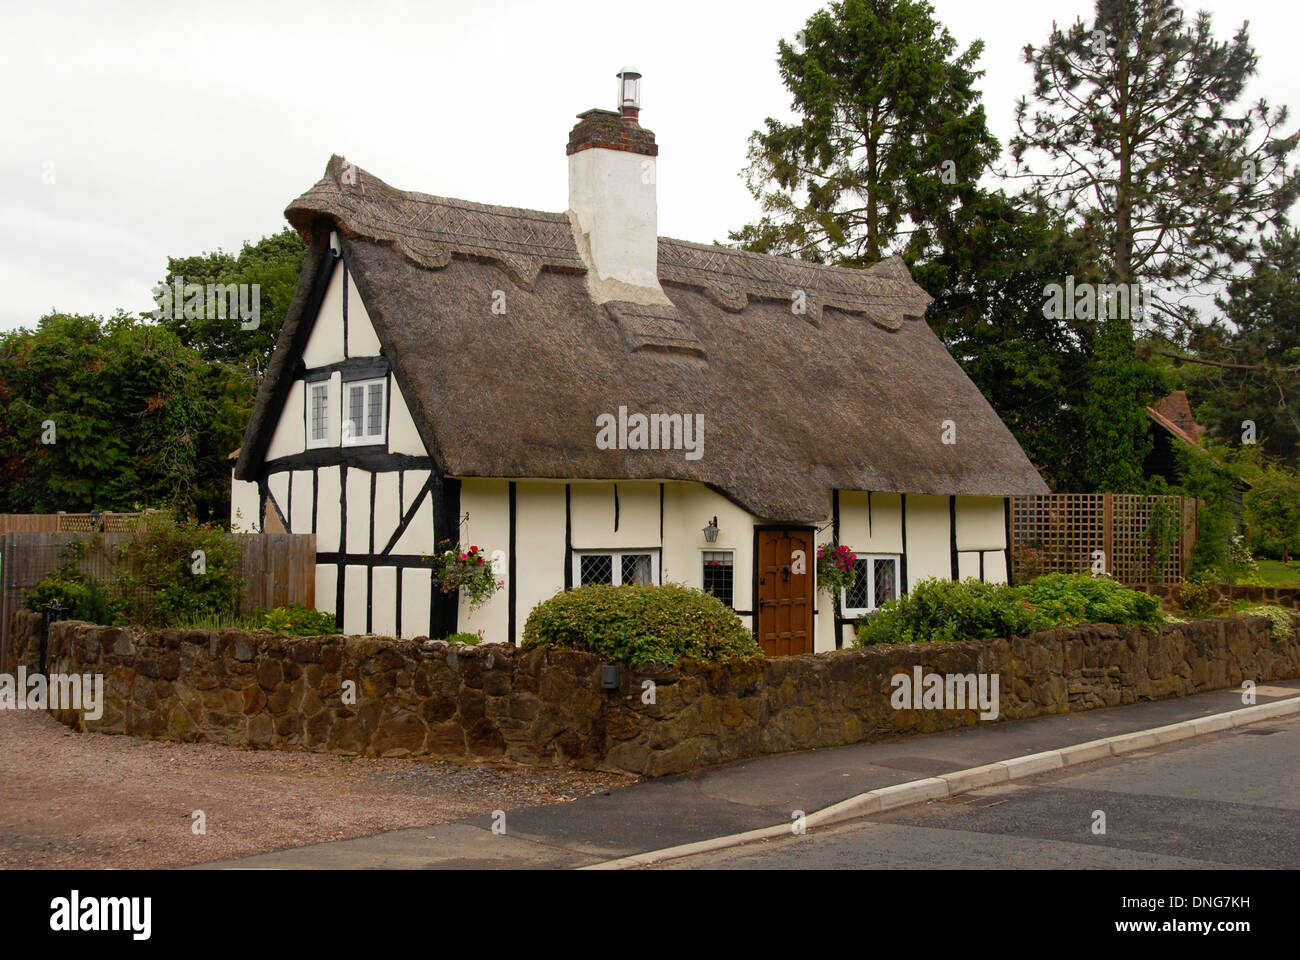 Seventeenth century thatched cottage on village High Street, Flitton, Bedfordshire Stock Photo